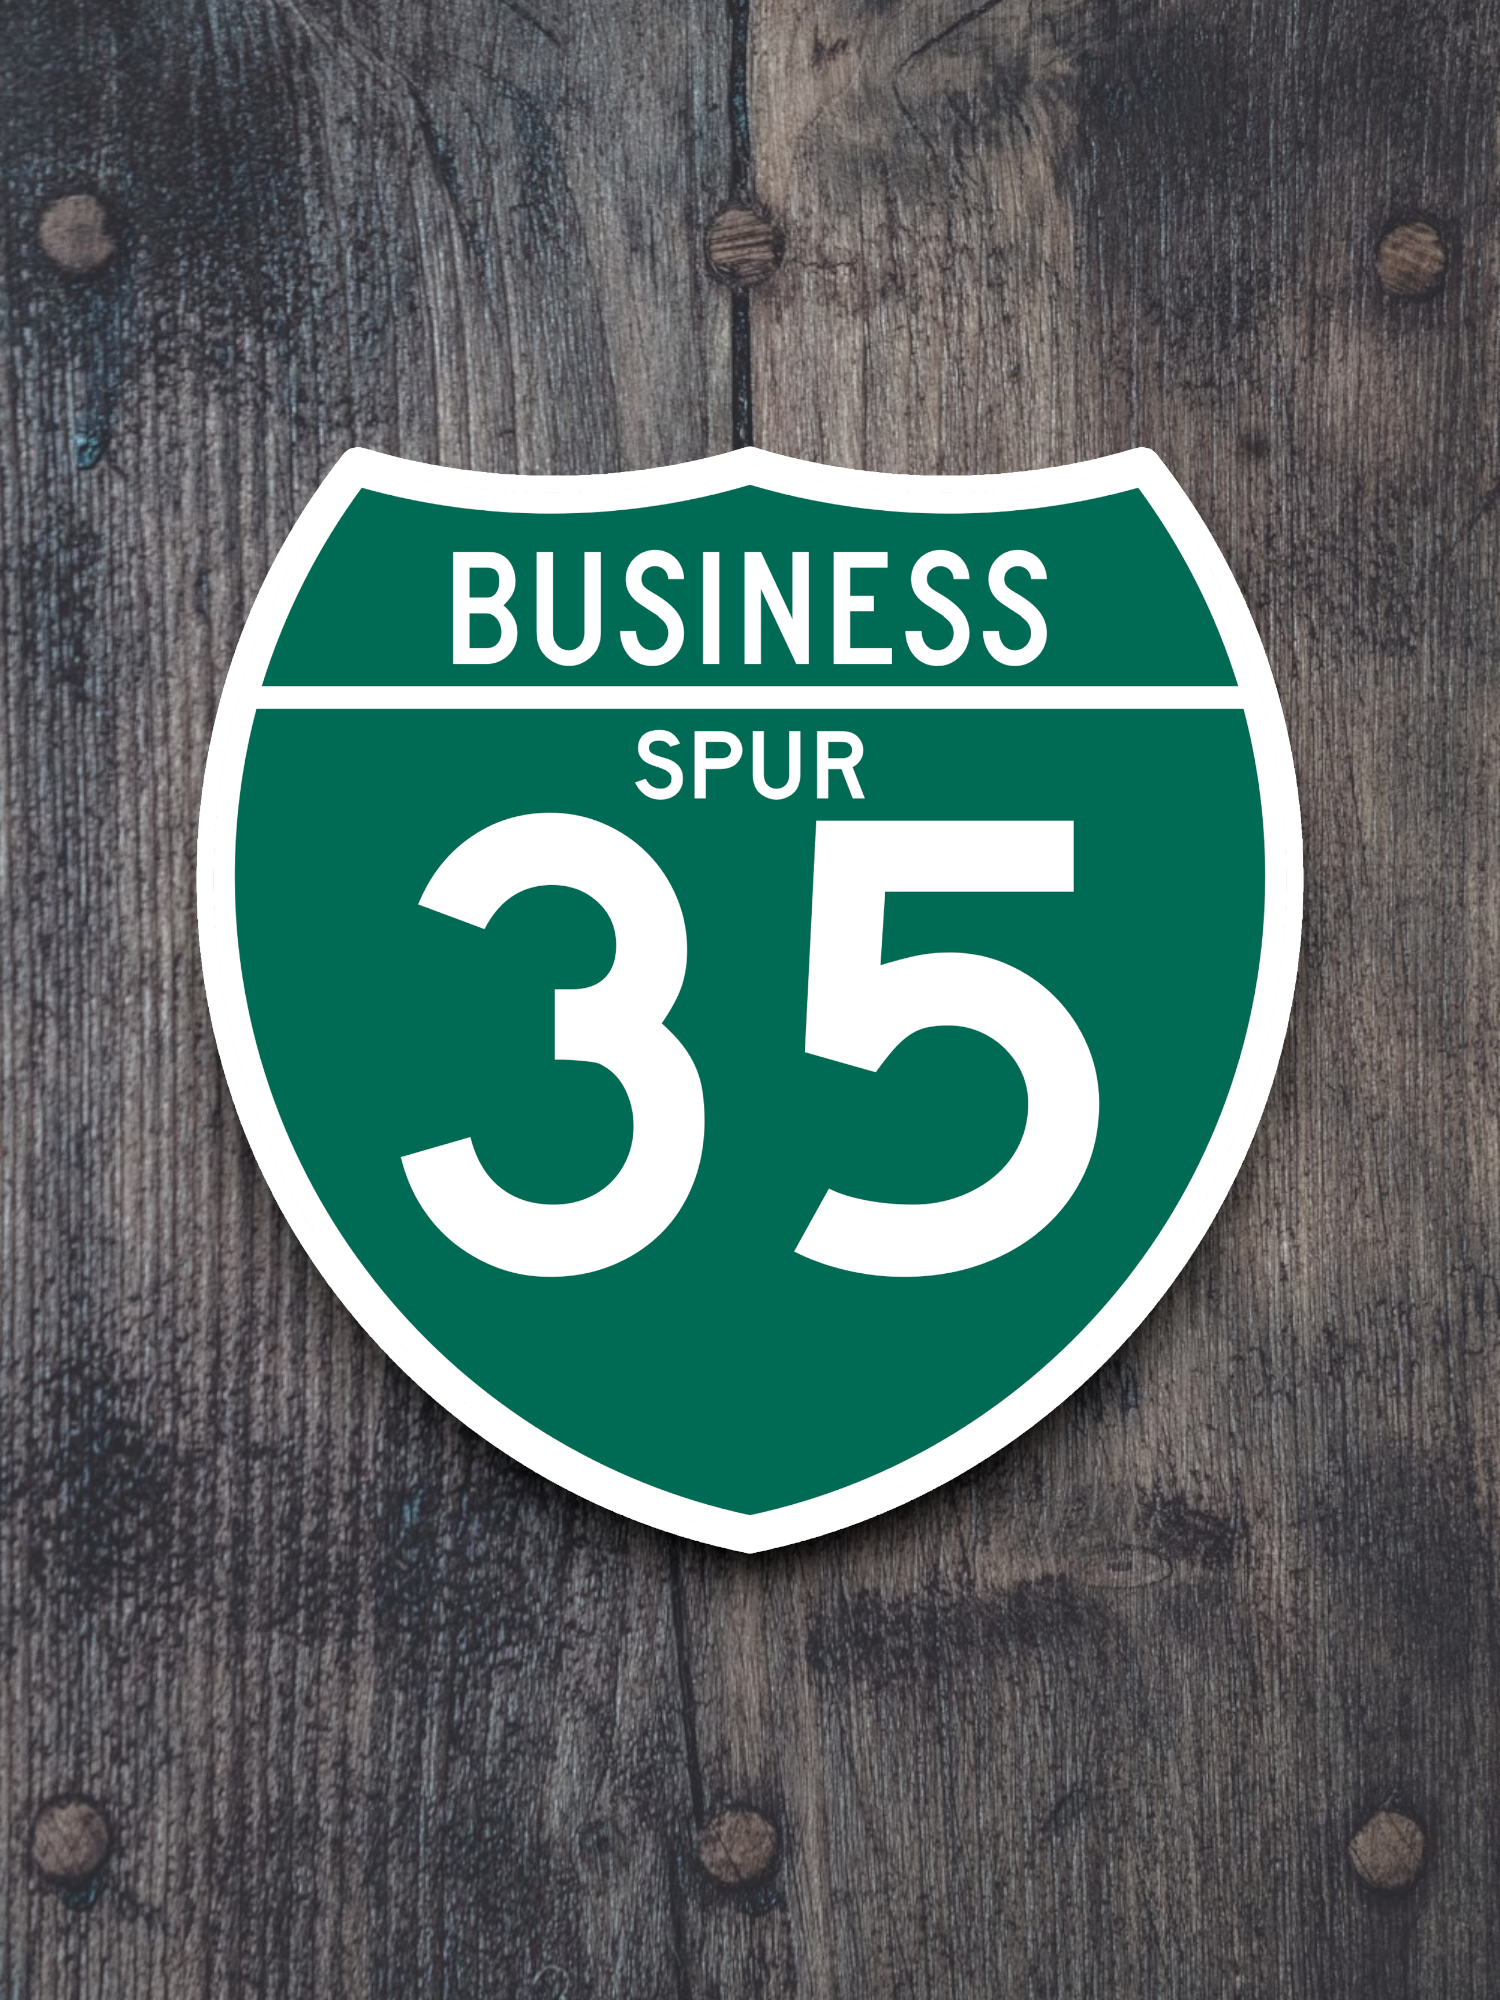 Business Spur 35 Road Sign Sticker